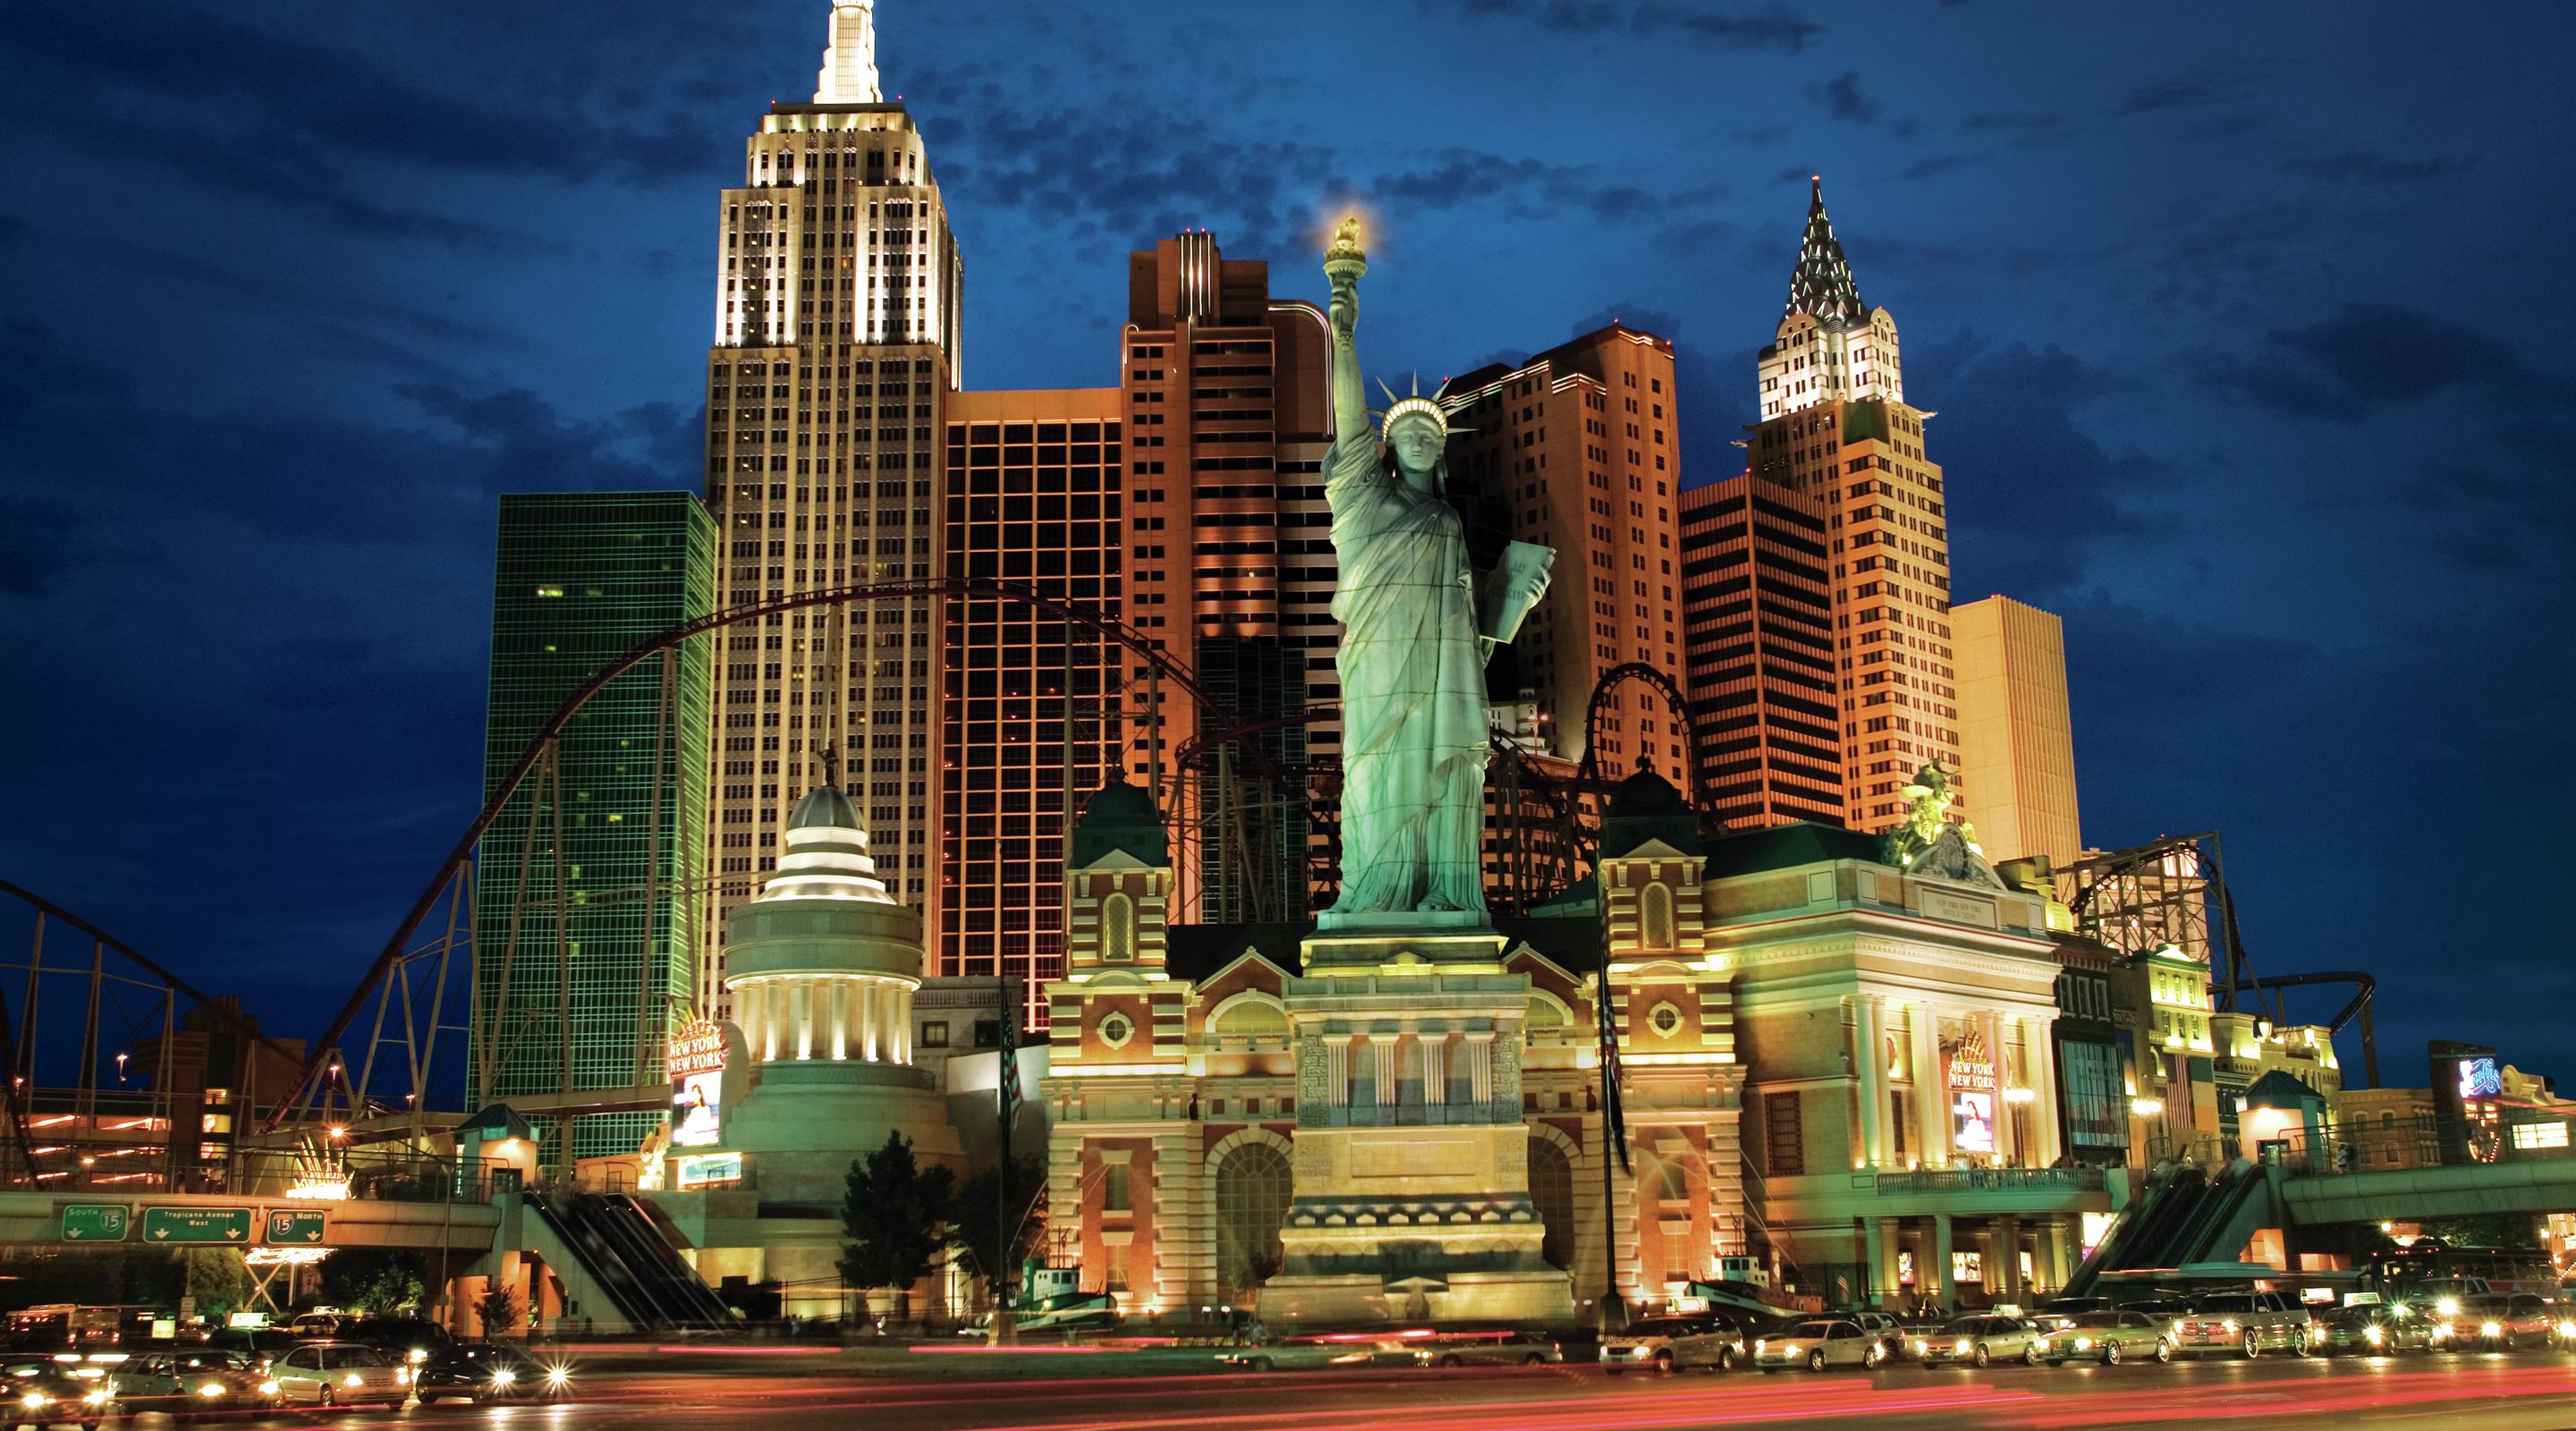 New York, New York Hotel Las Vegas